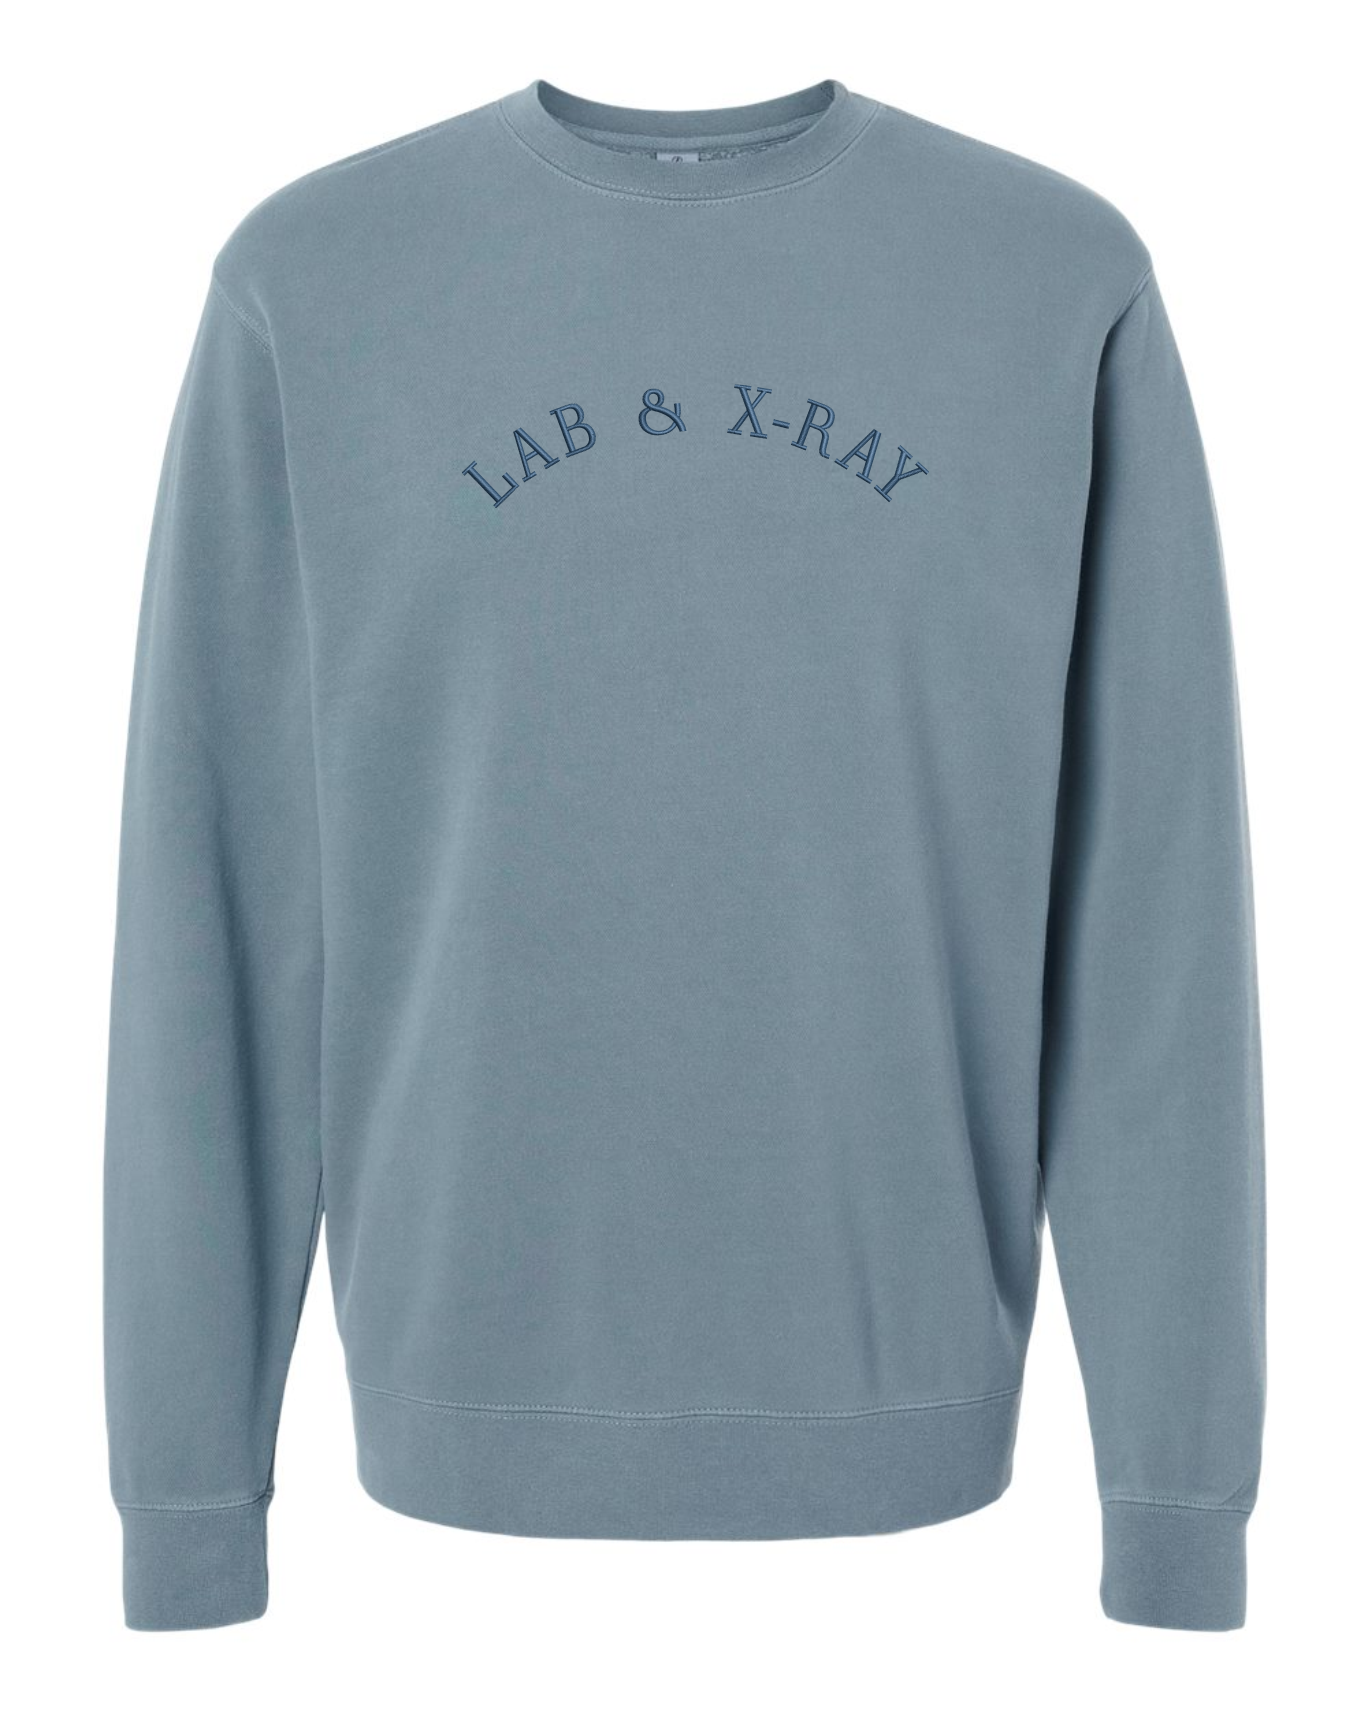 Lab & X-Ray Embroidered Crewneck | Slate Blue